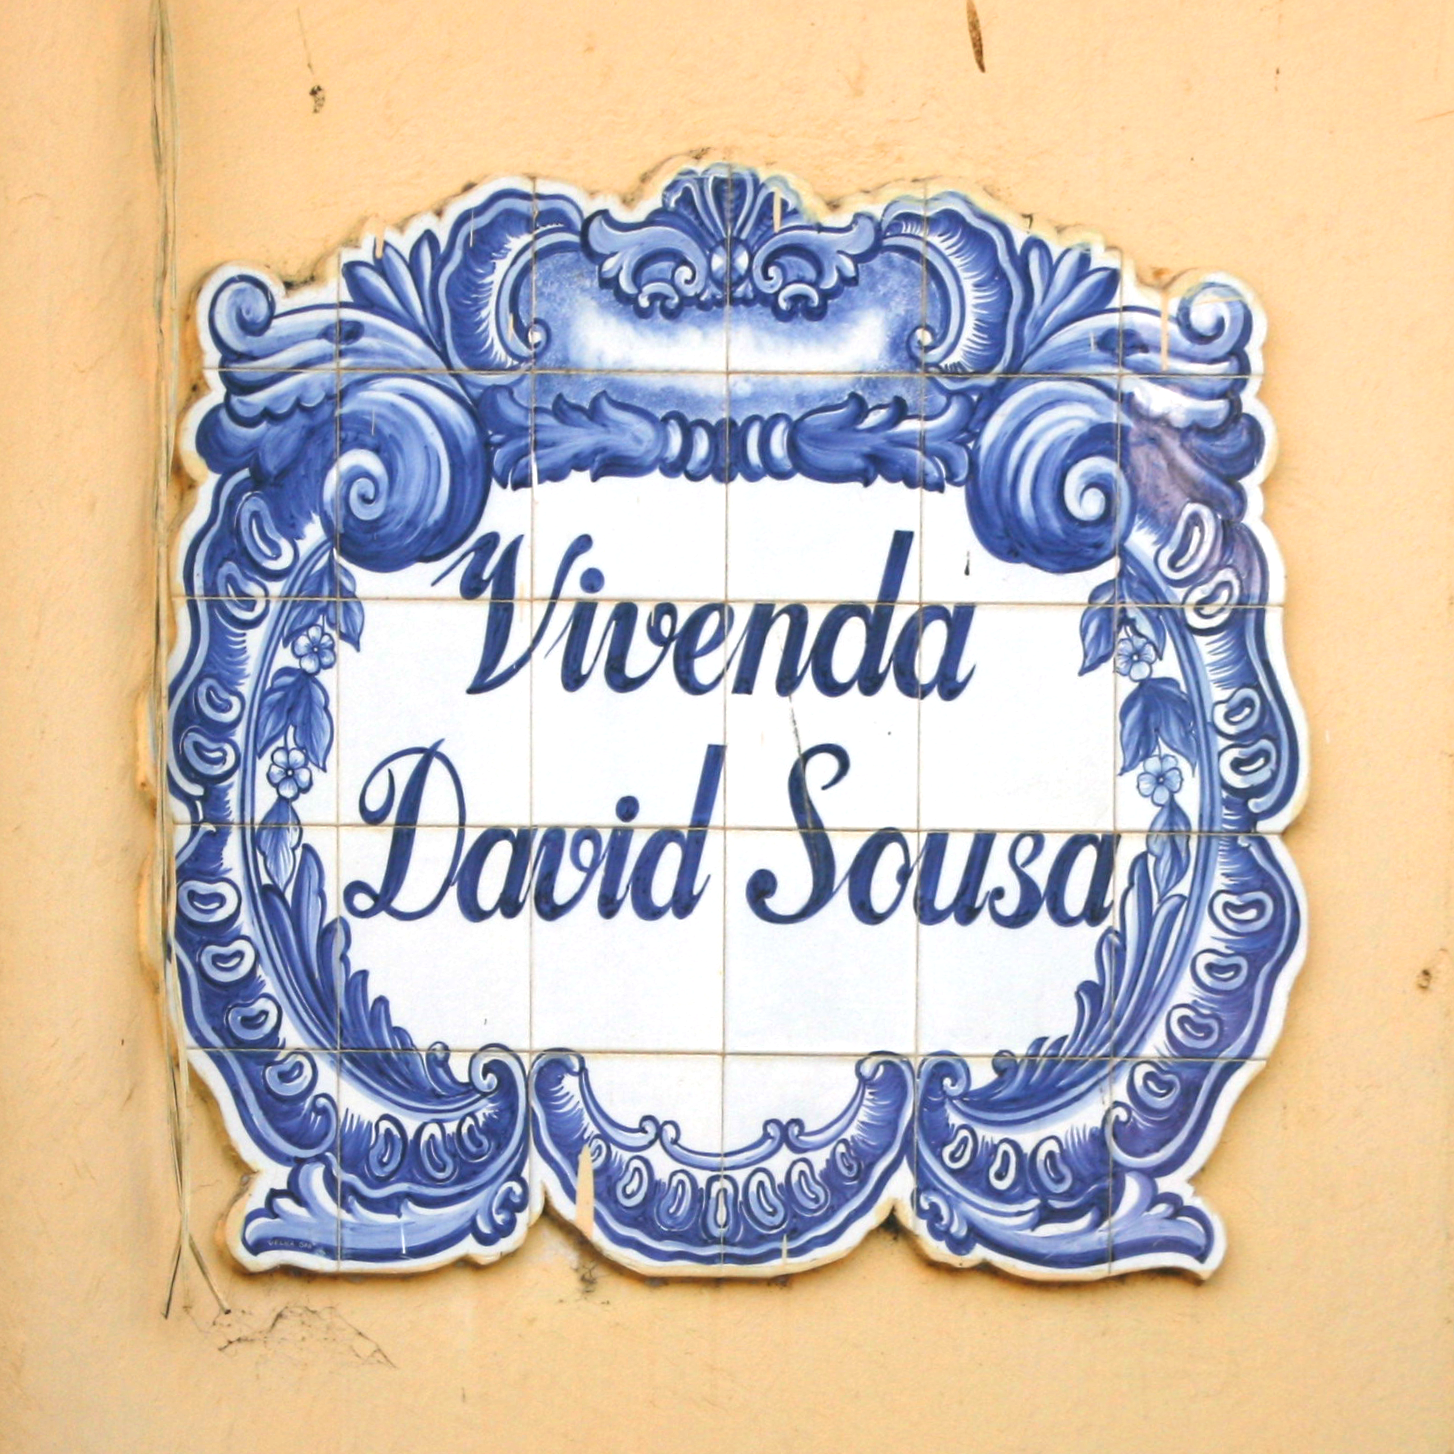 Vivenda David Sousa